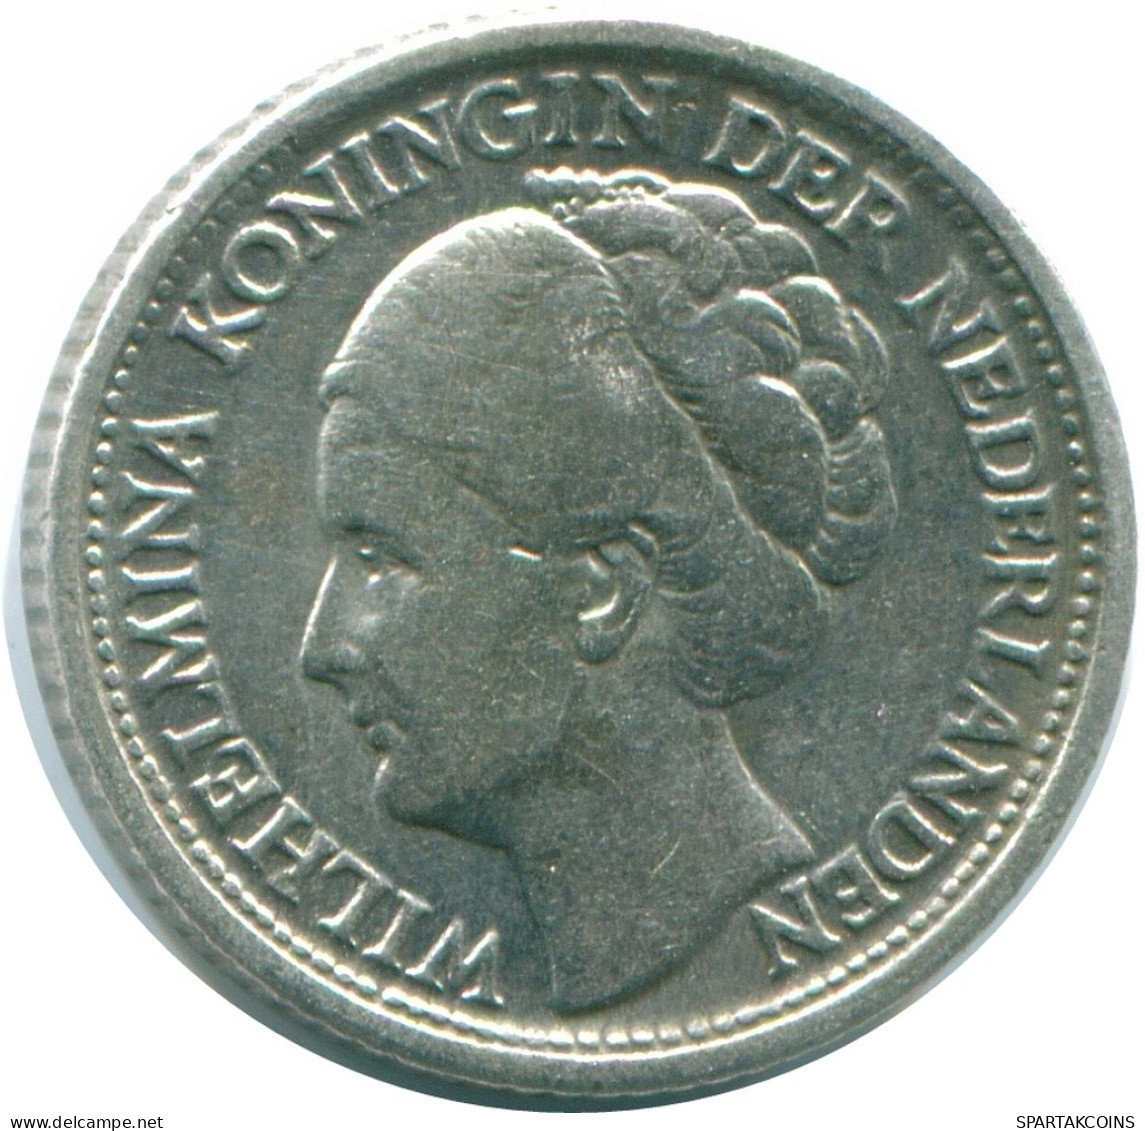 1/4 GULDEN 1944 CURACAO Netherlands SILVER Colonial Coin #NL10572.4.U - Curacao